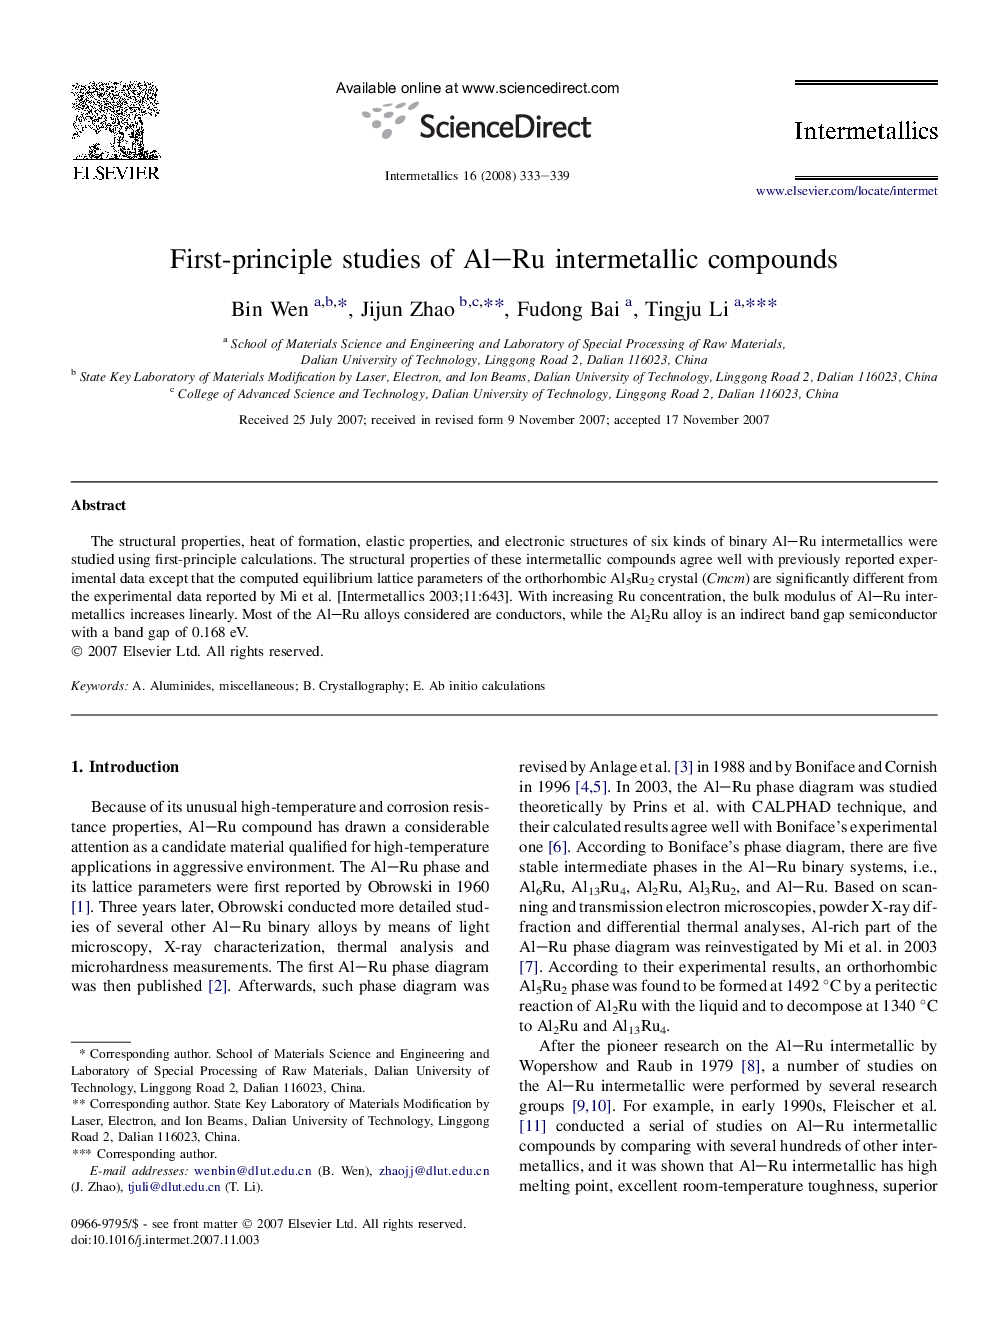 First-principle studies of Al–Ru intermetallic compounds